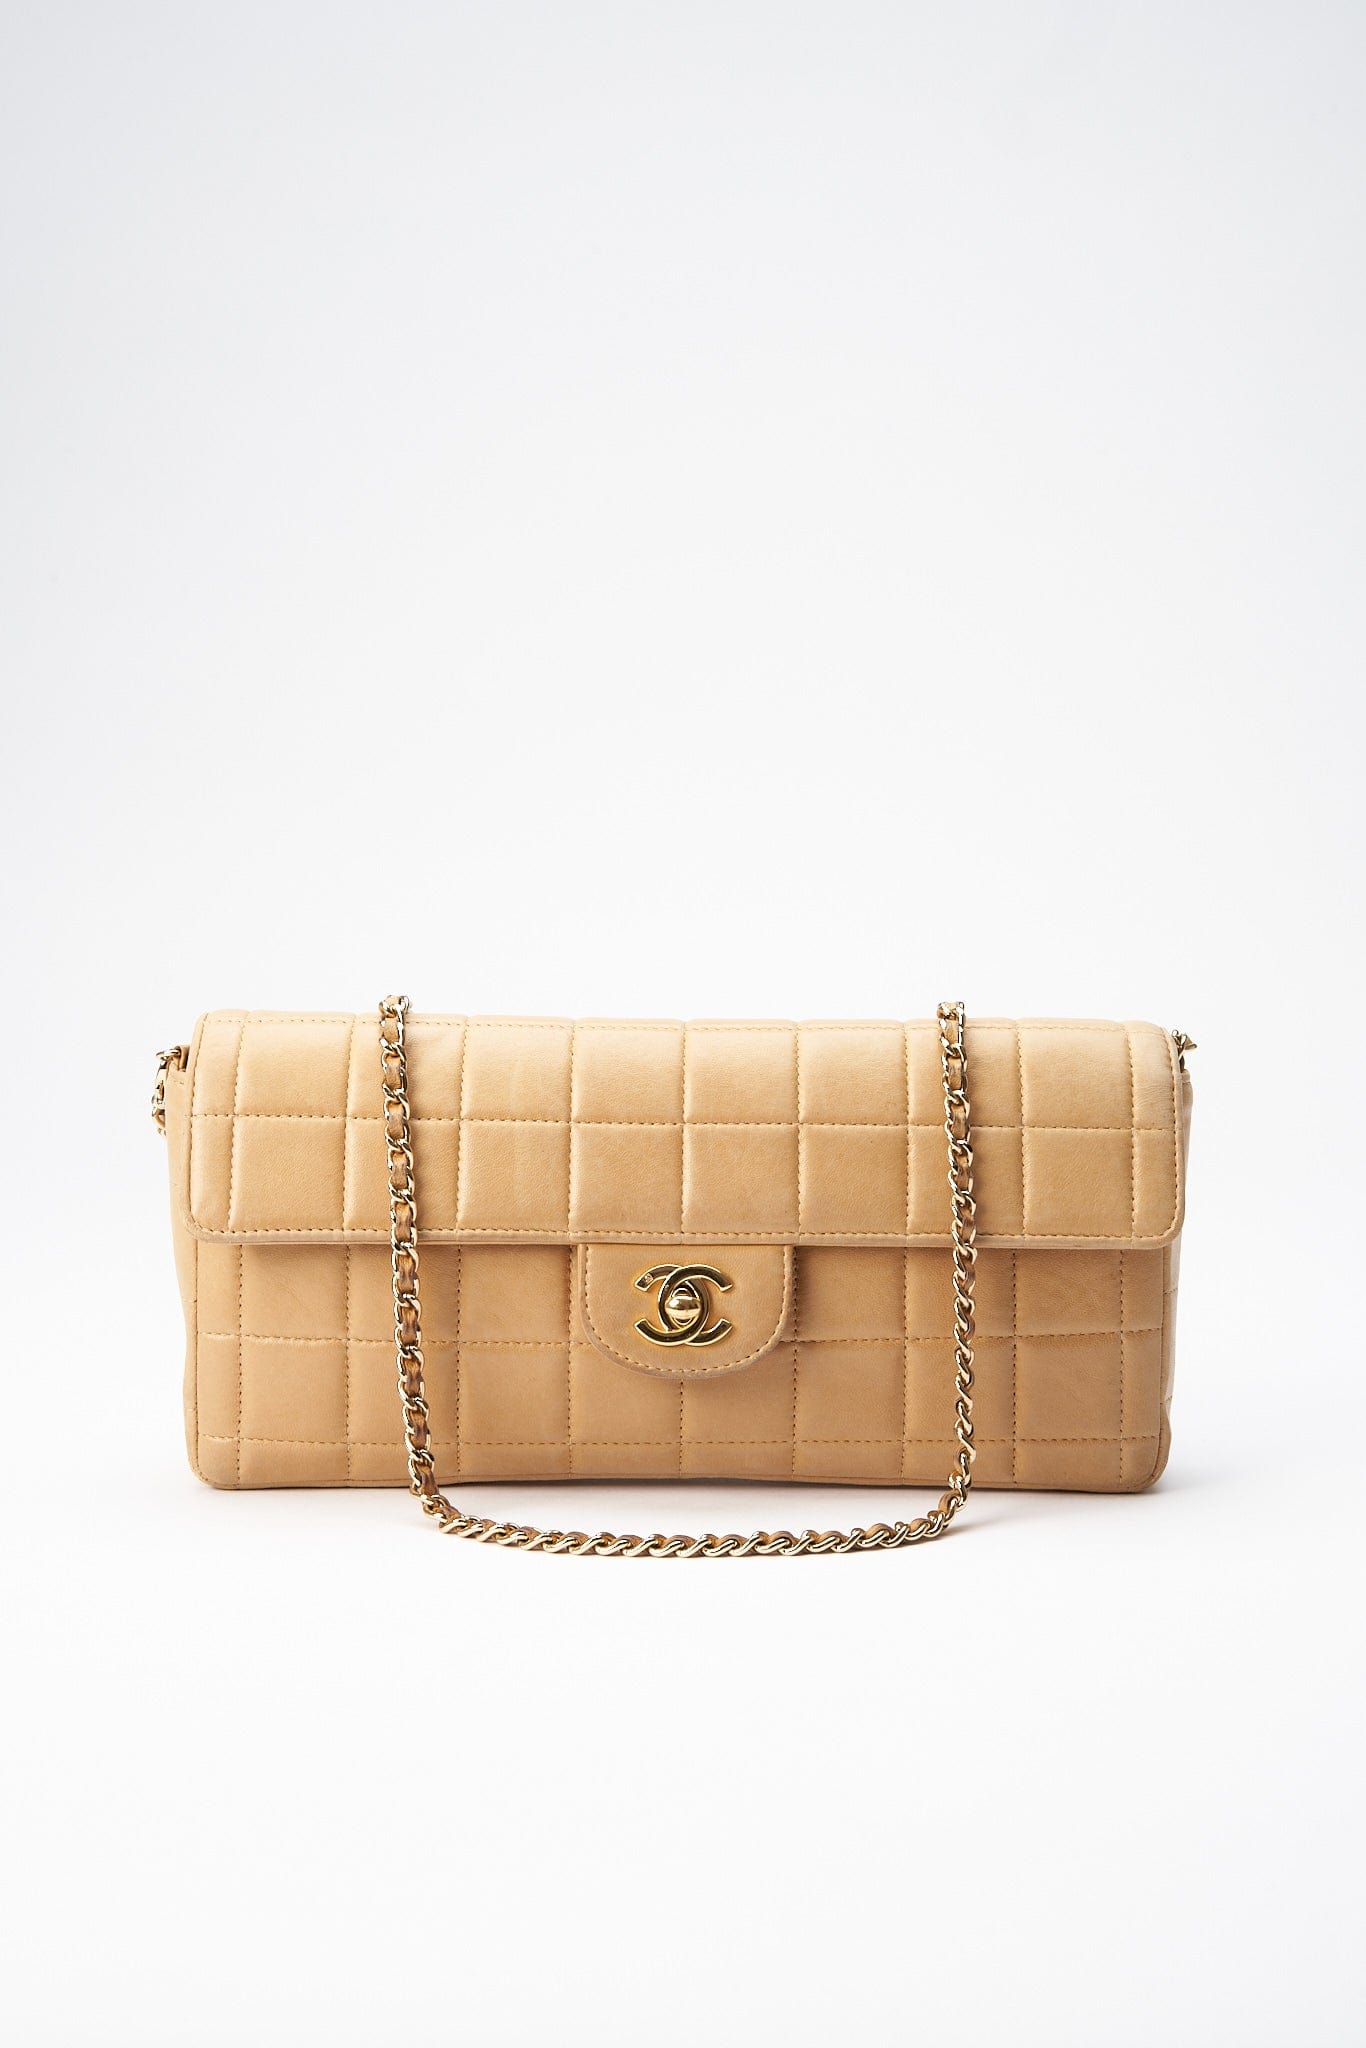 Chanel Chocolate Bar Bag - Beige Leather